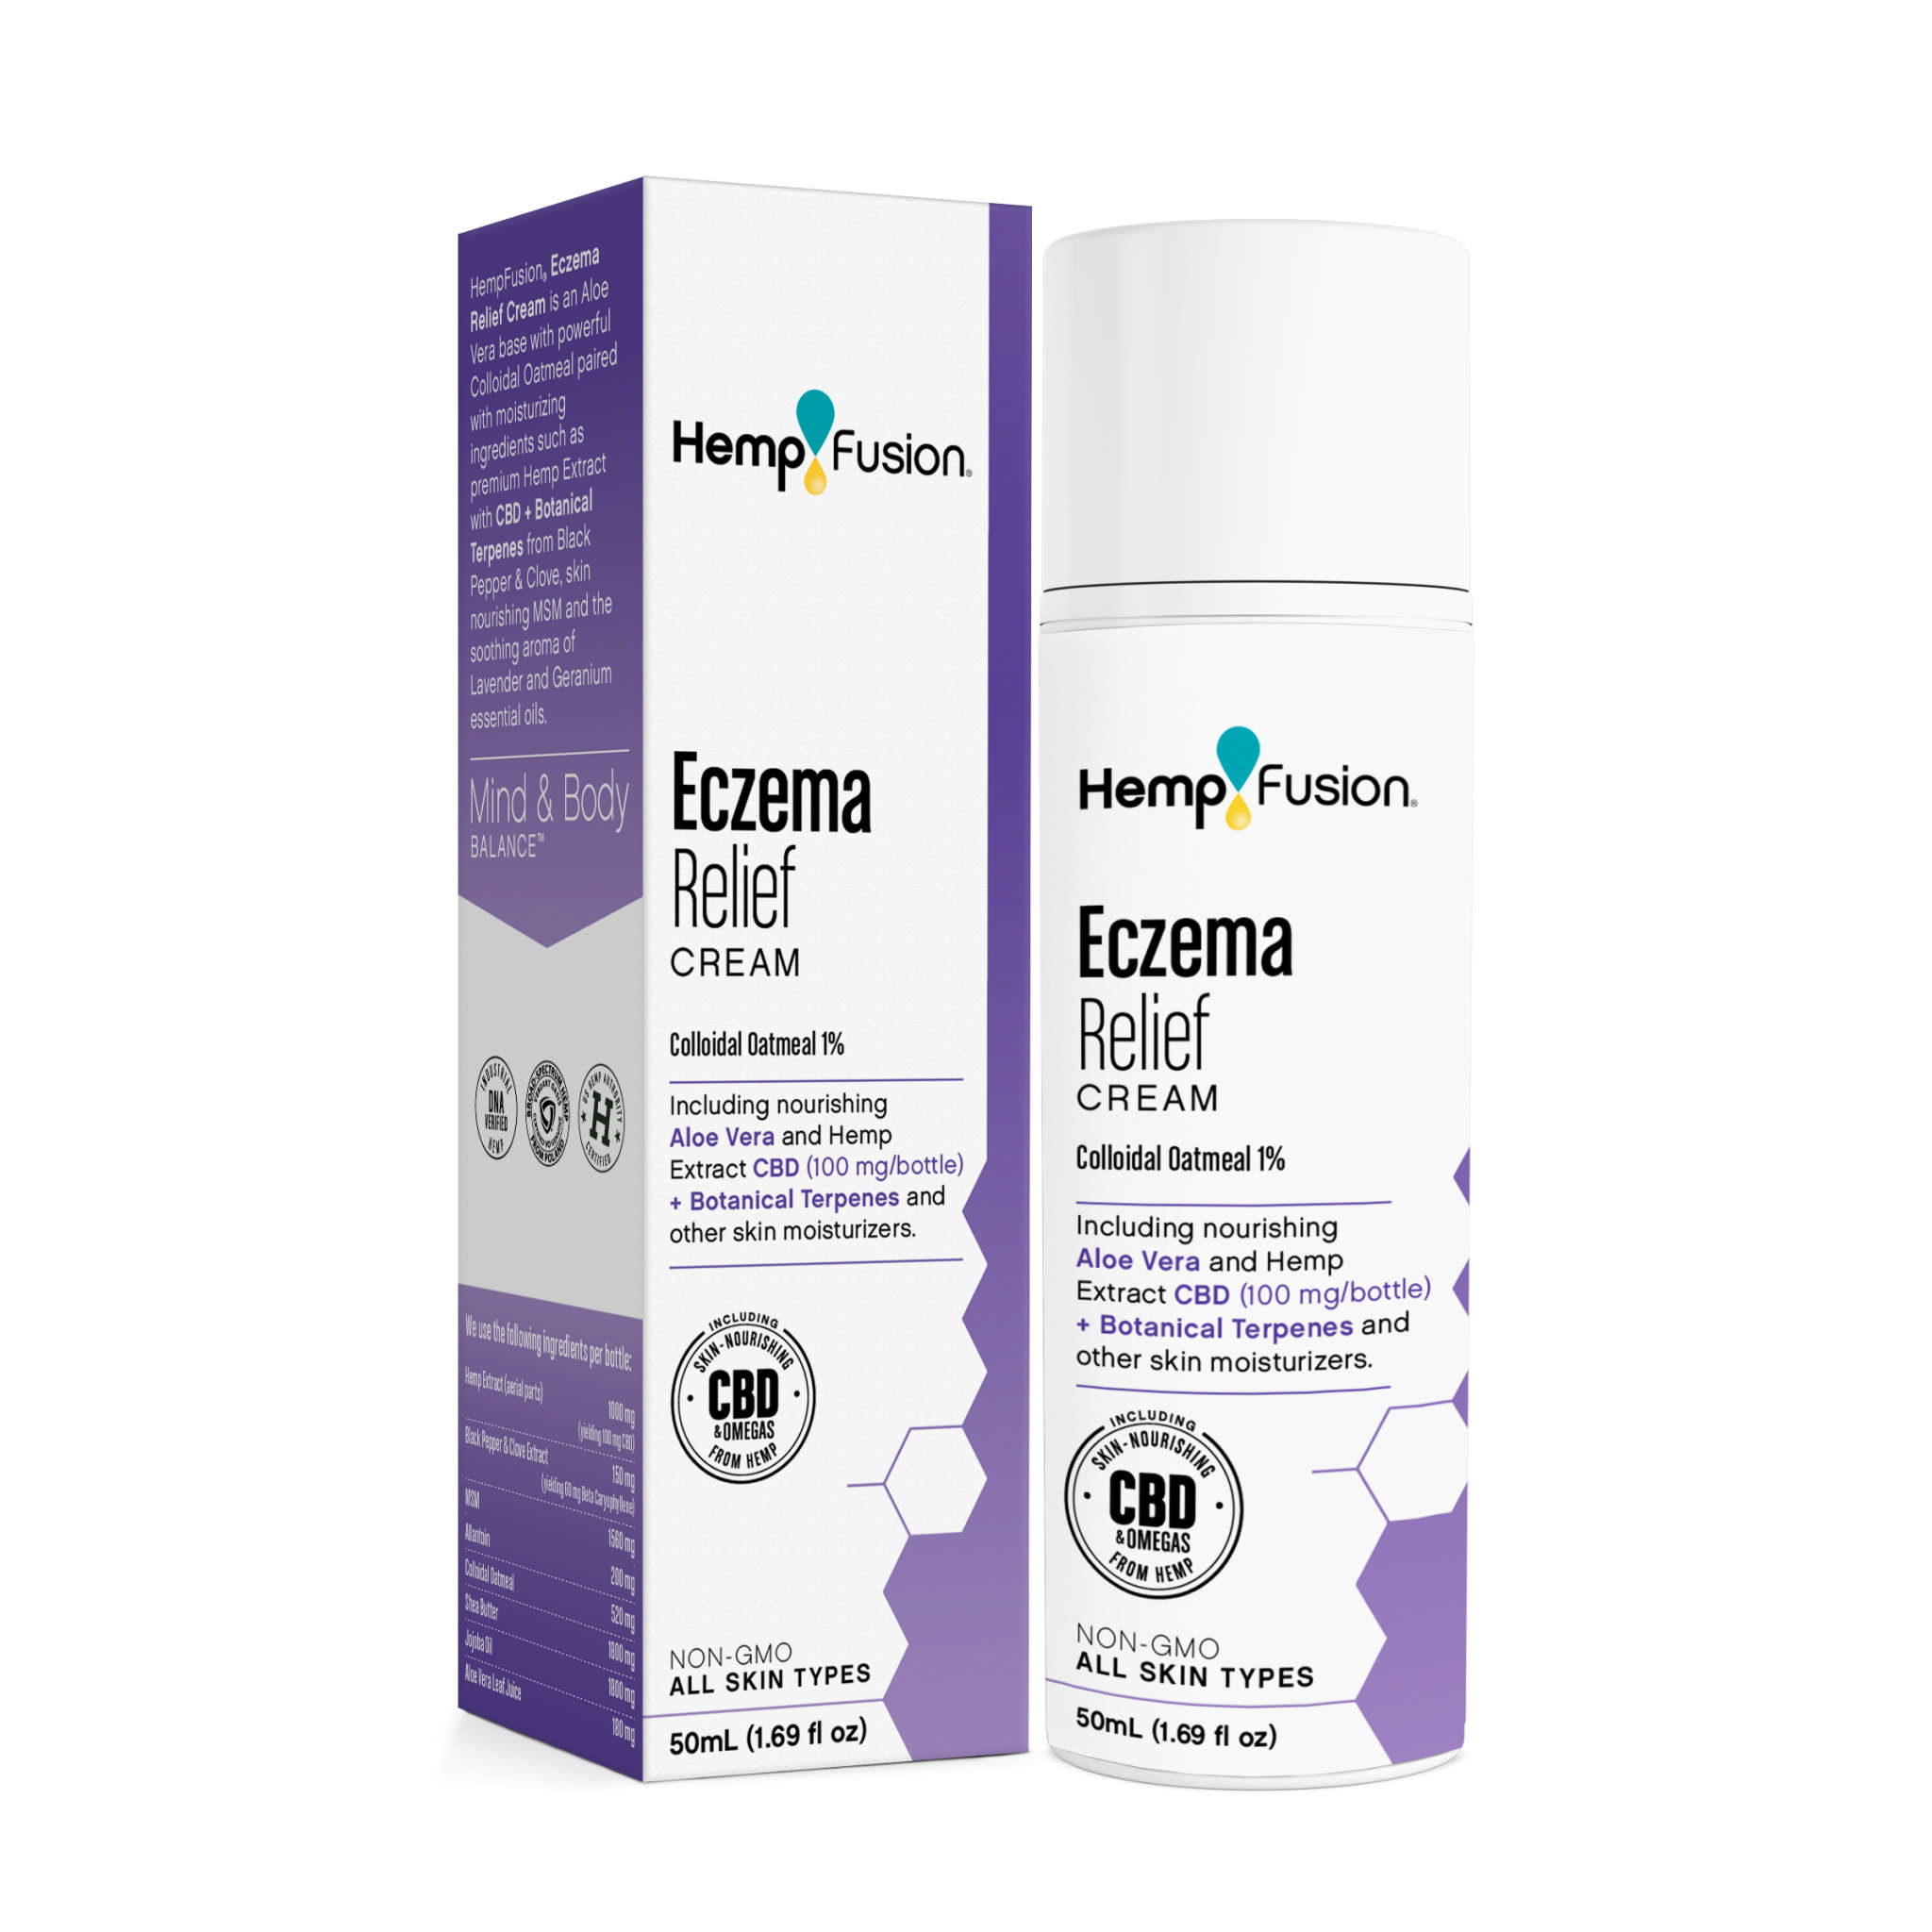 Hemp Fusion - Eczema Relief crm + 100mg Cbd